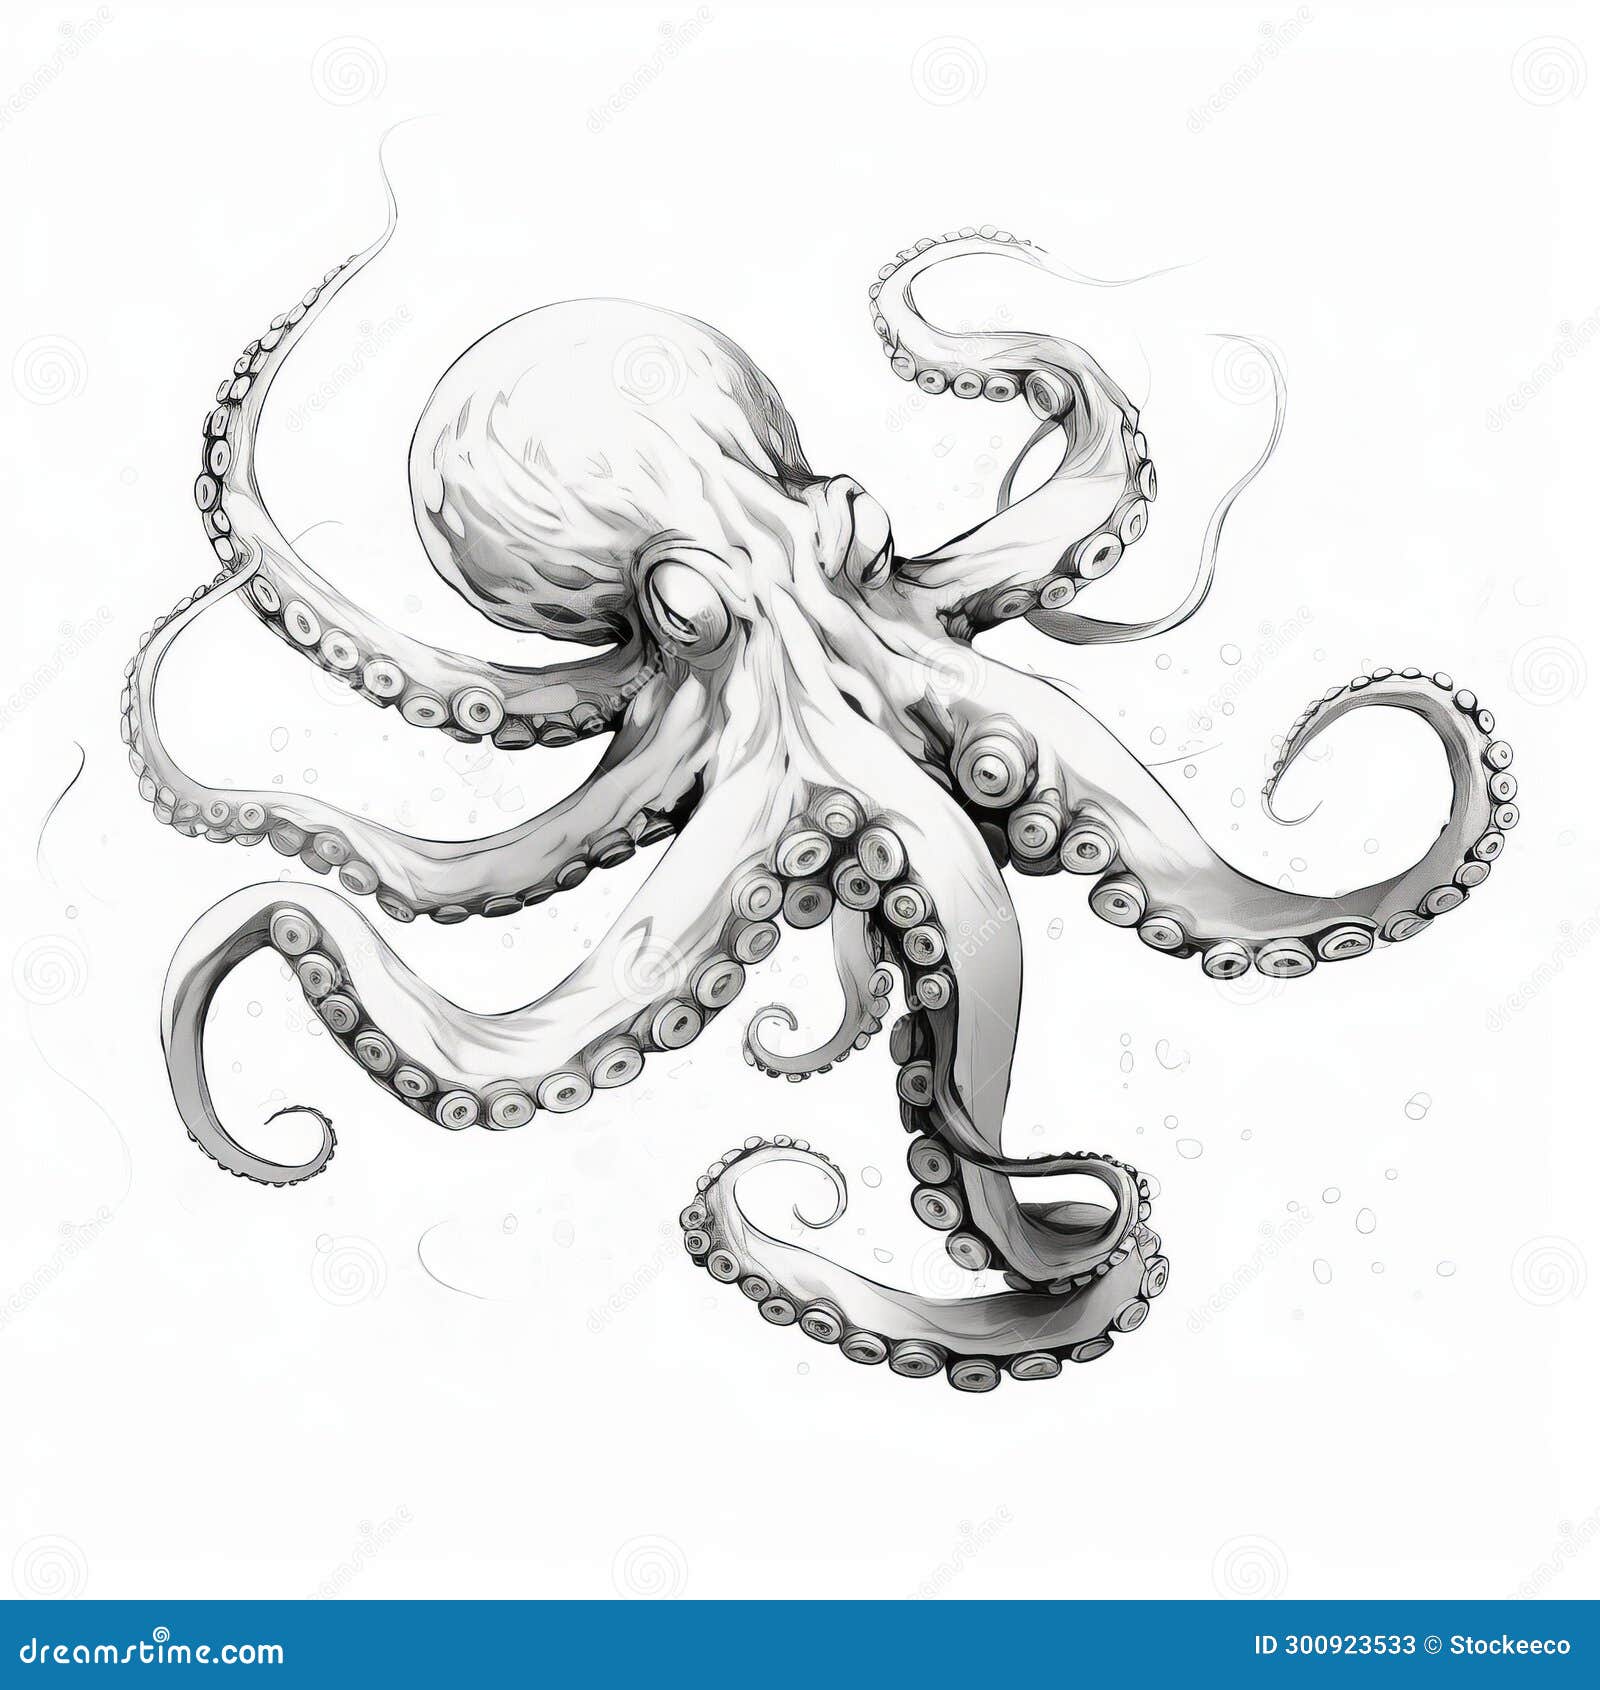 Art Immortal Tattoo : Tattoos : Nick Sadler : Octopus